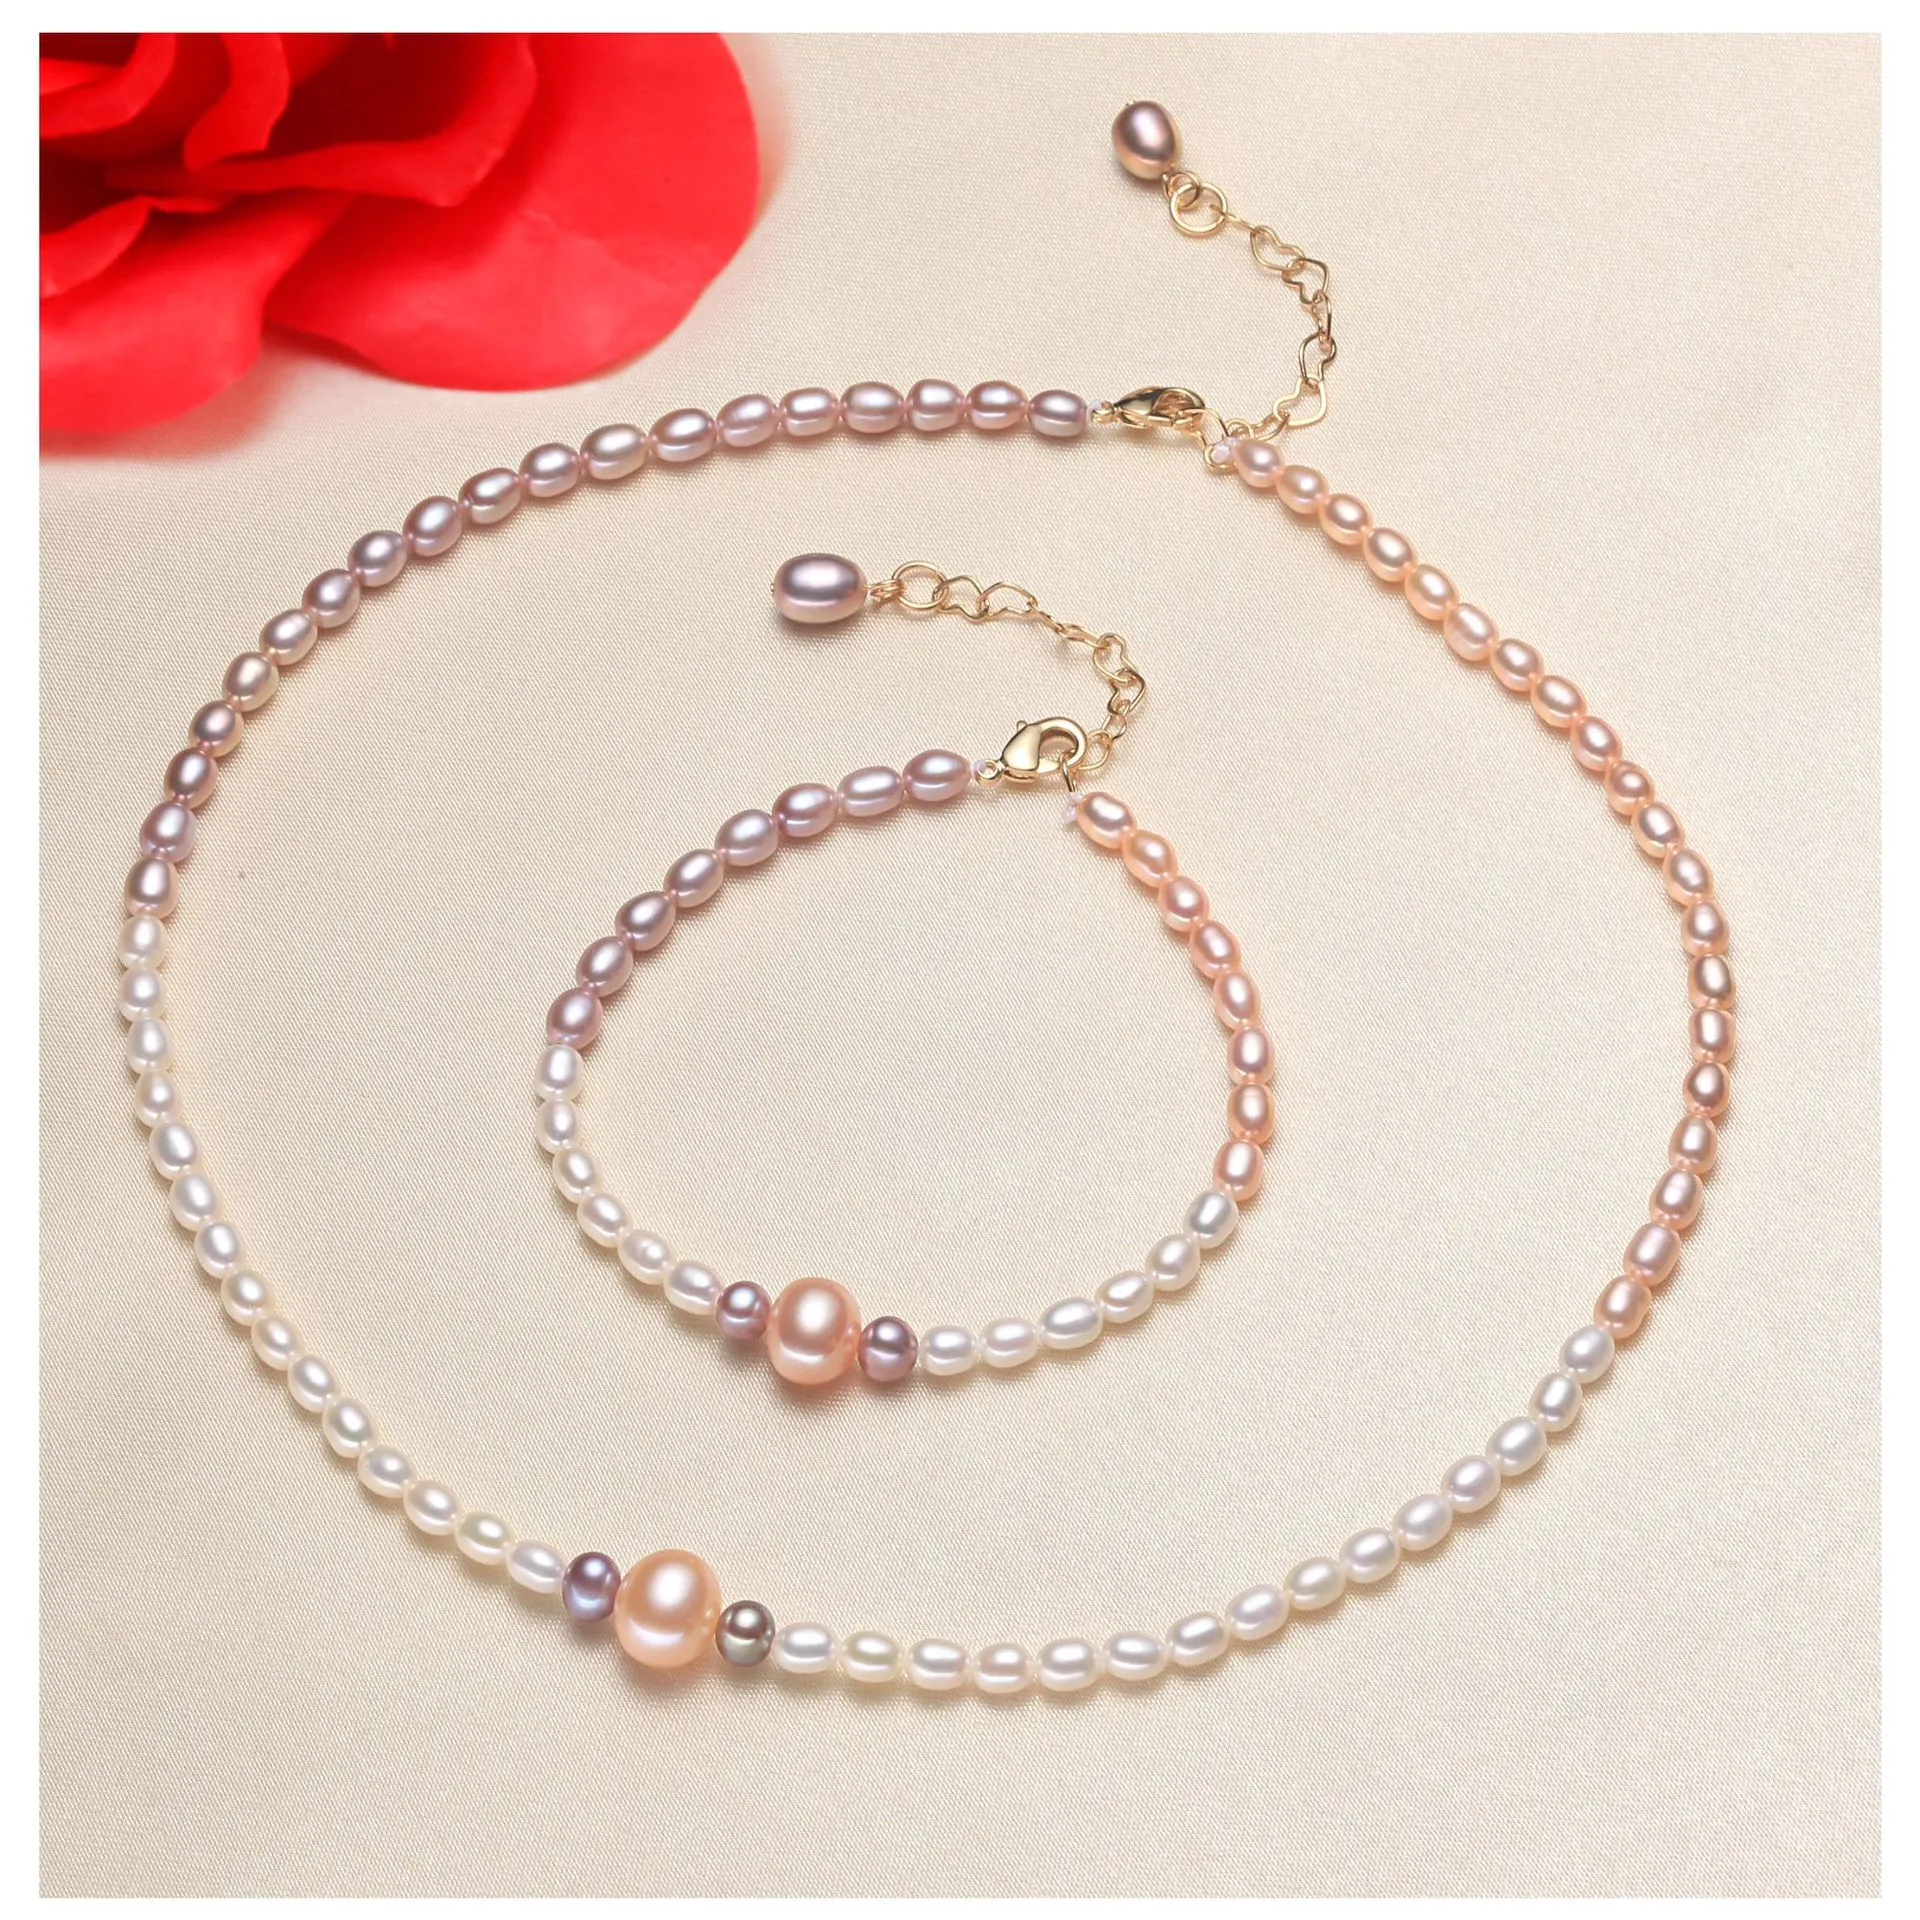 Origin direct selling natural freshwater pearl bracelet necklace set feminine pearl jewelry store wholesale